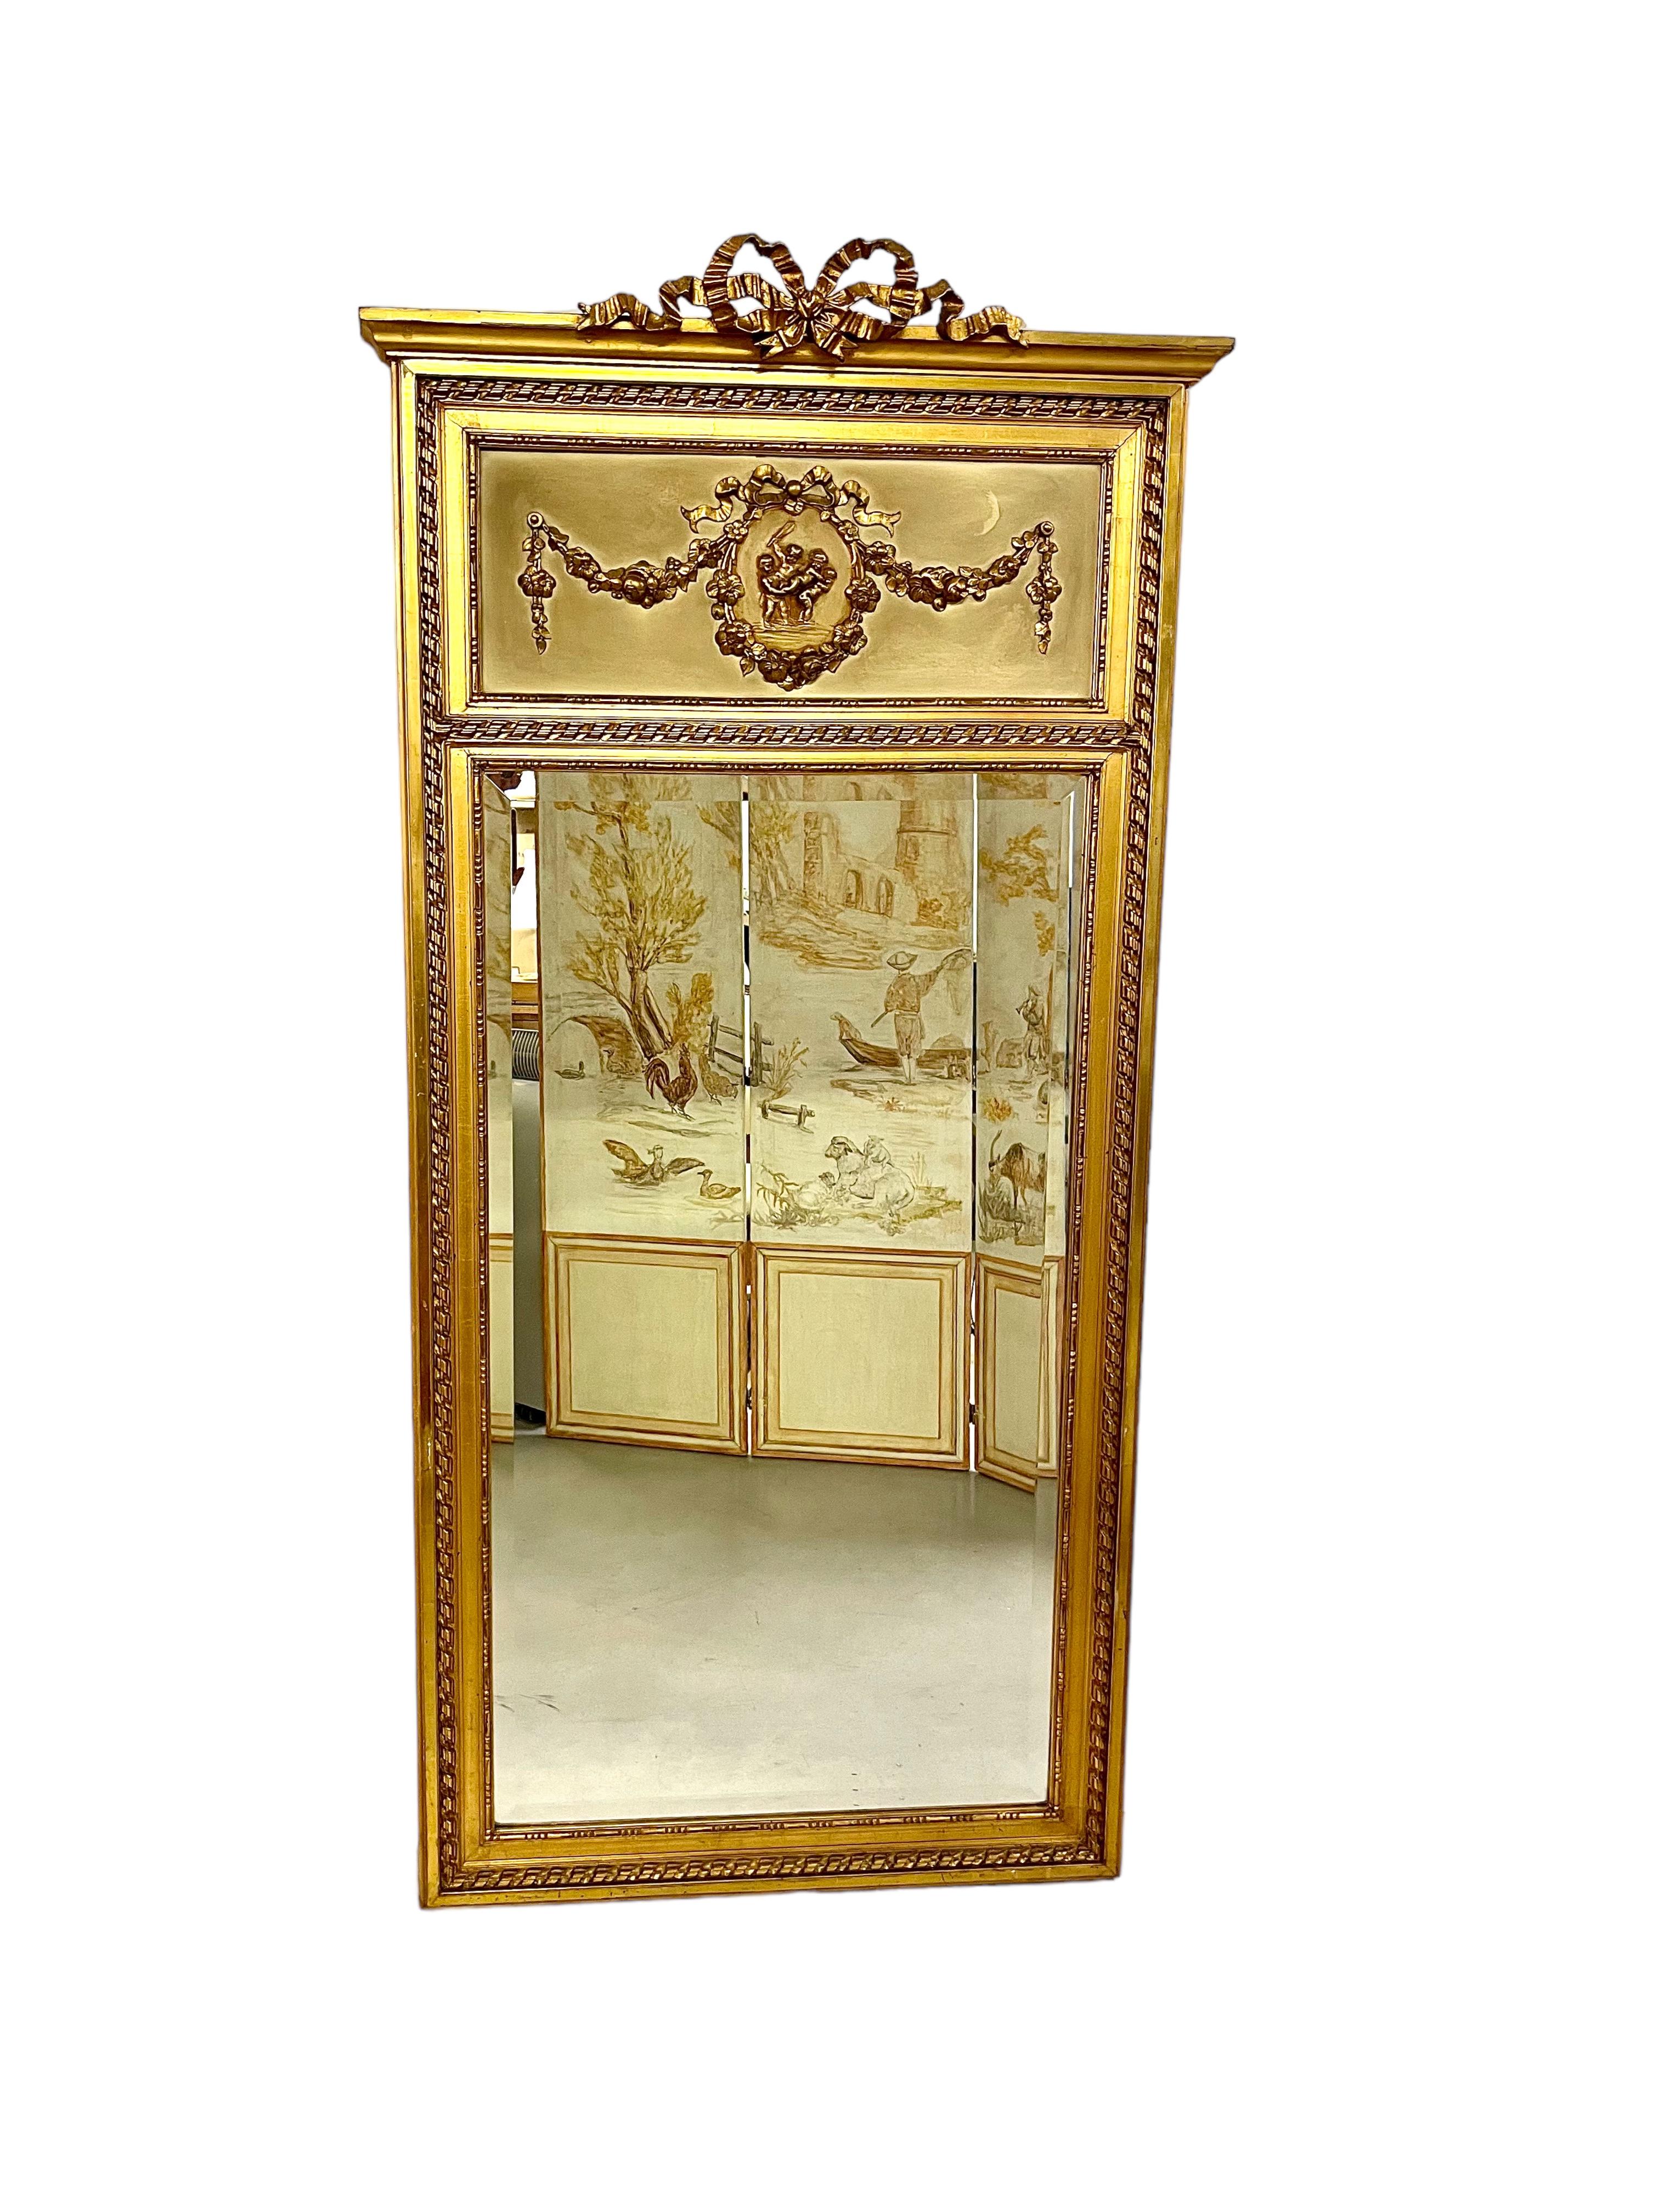  19th Century Louis XVI Trumeau Gilded Mirror with Mischievous Cherubs Design For Sale 6